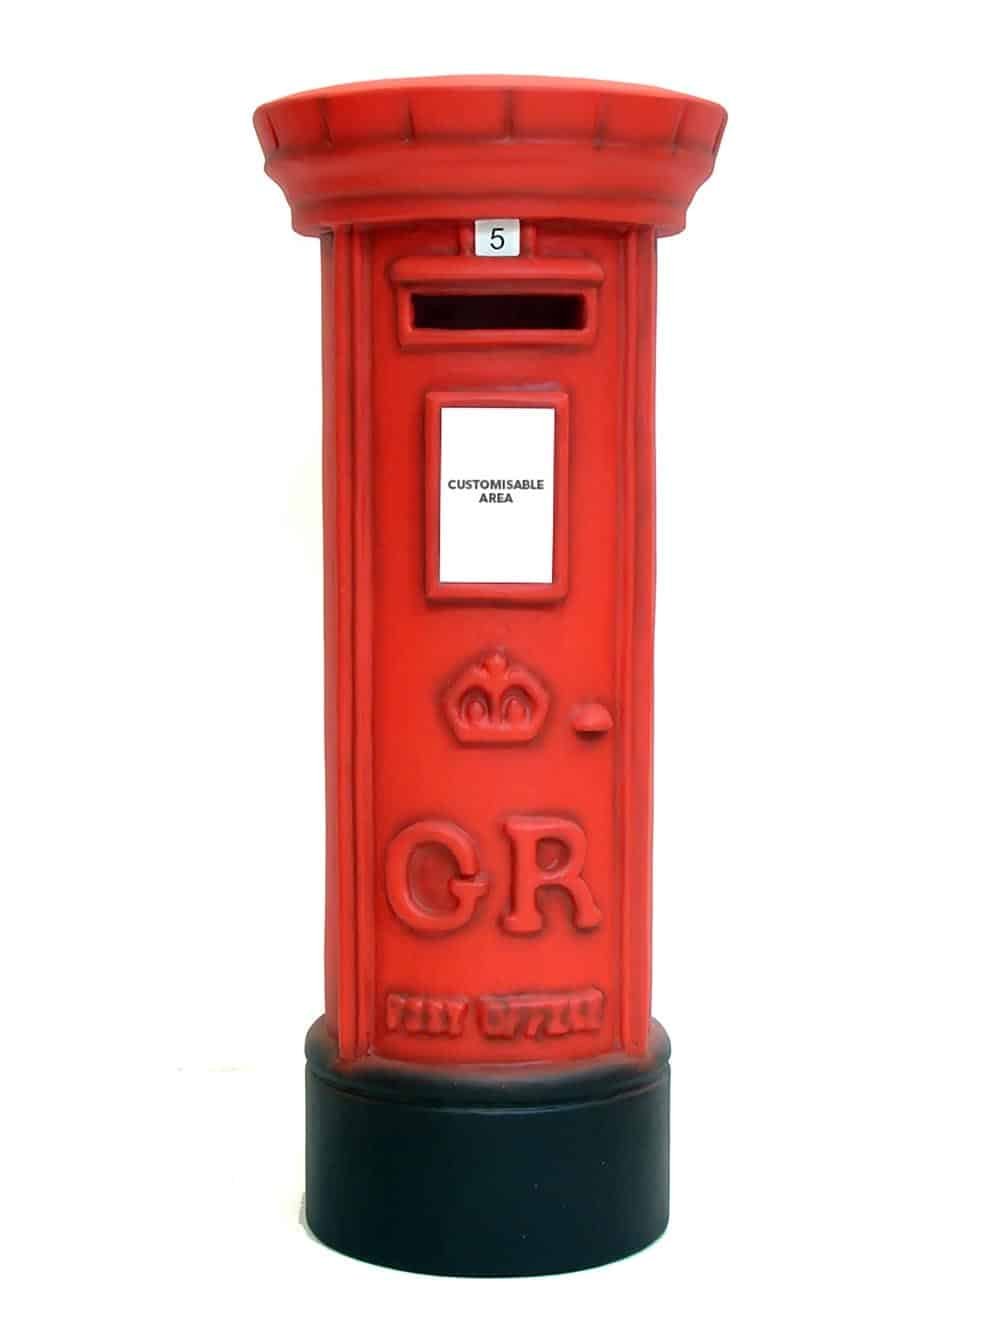 Customised British Post Box